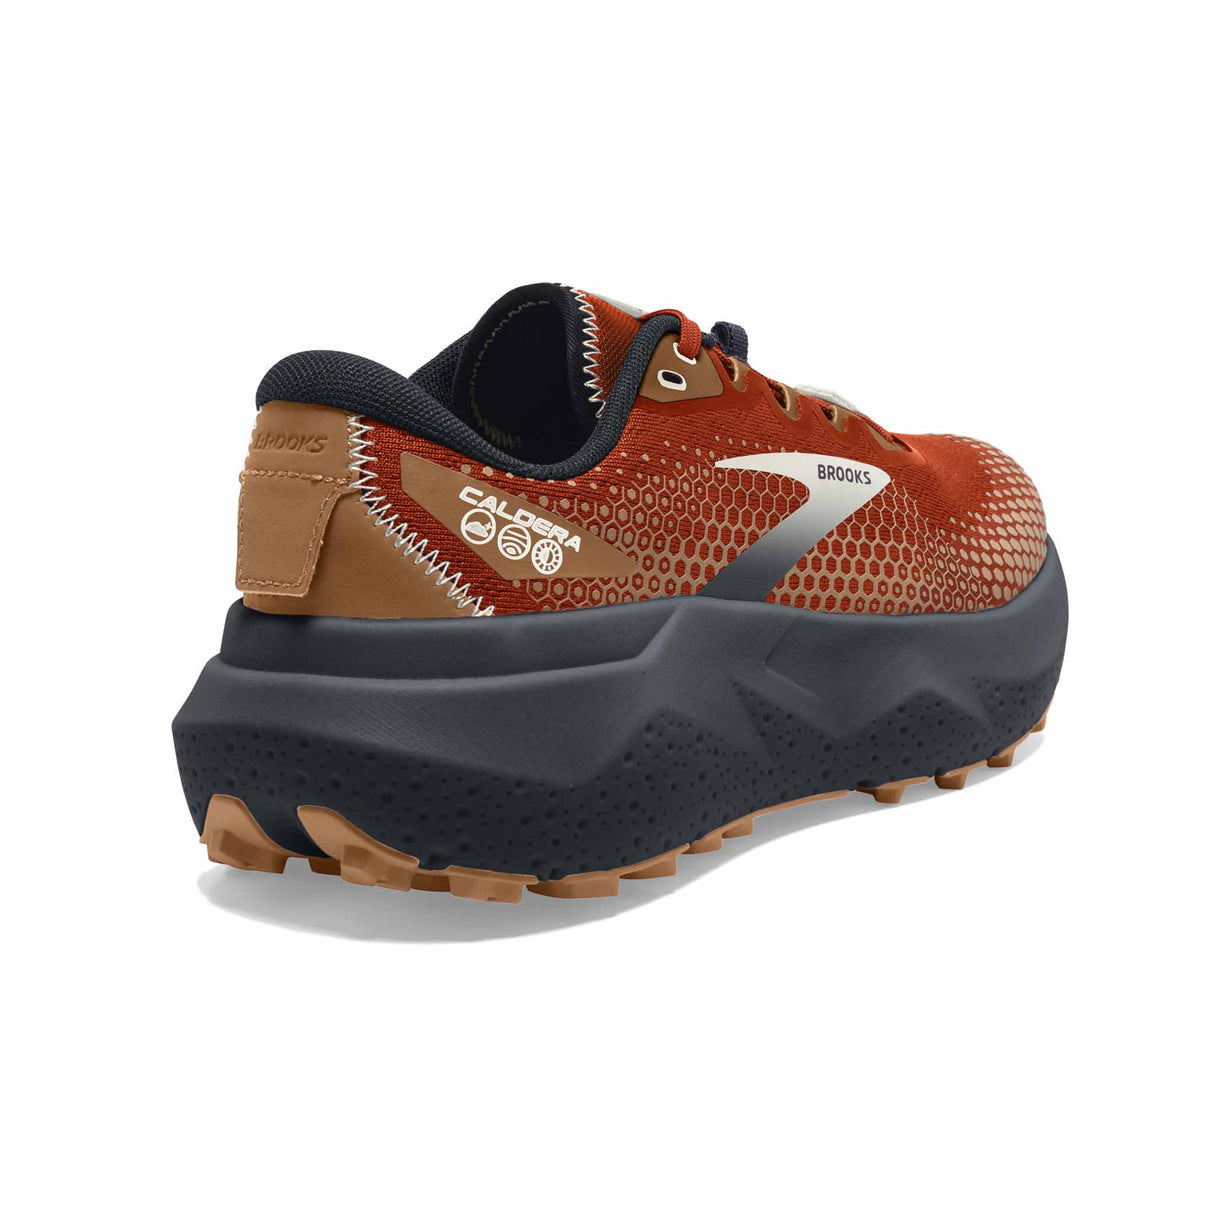 Brooks Caldera 6 chaussures de course à pied trail homme - Rooibos/Biscuit/Peacoat